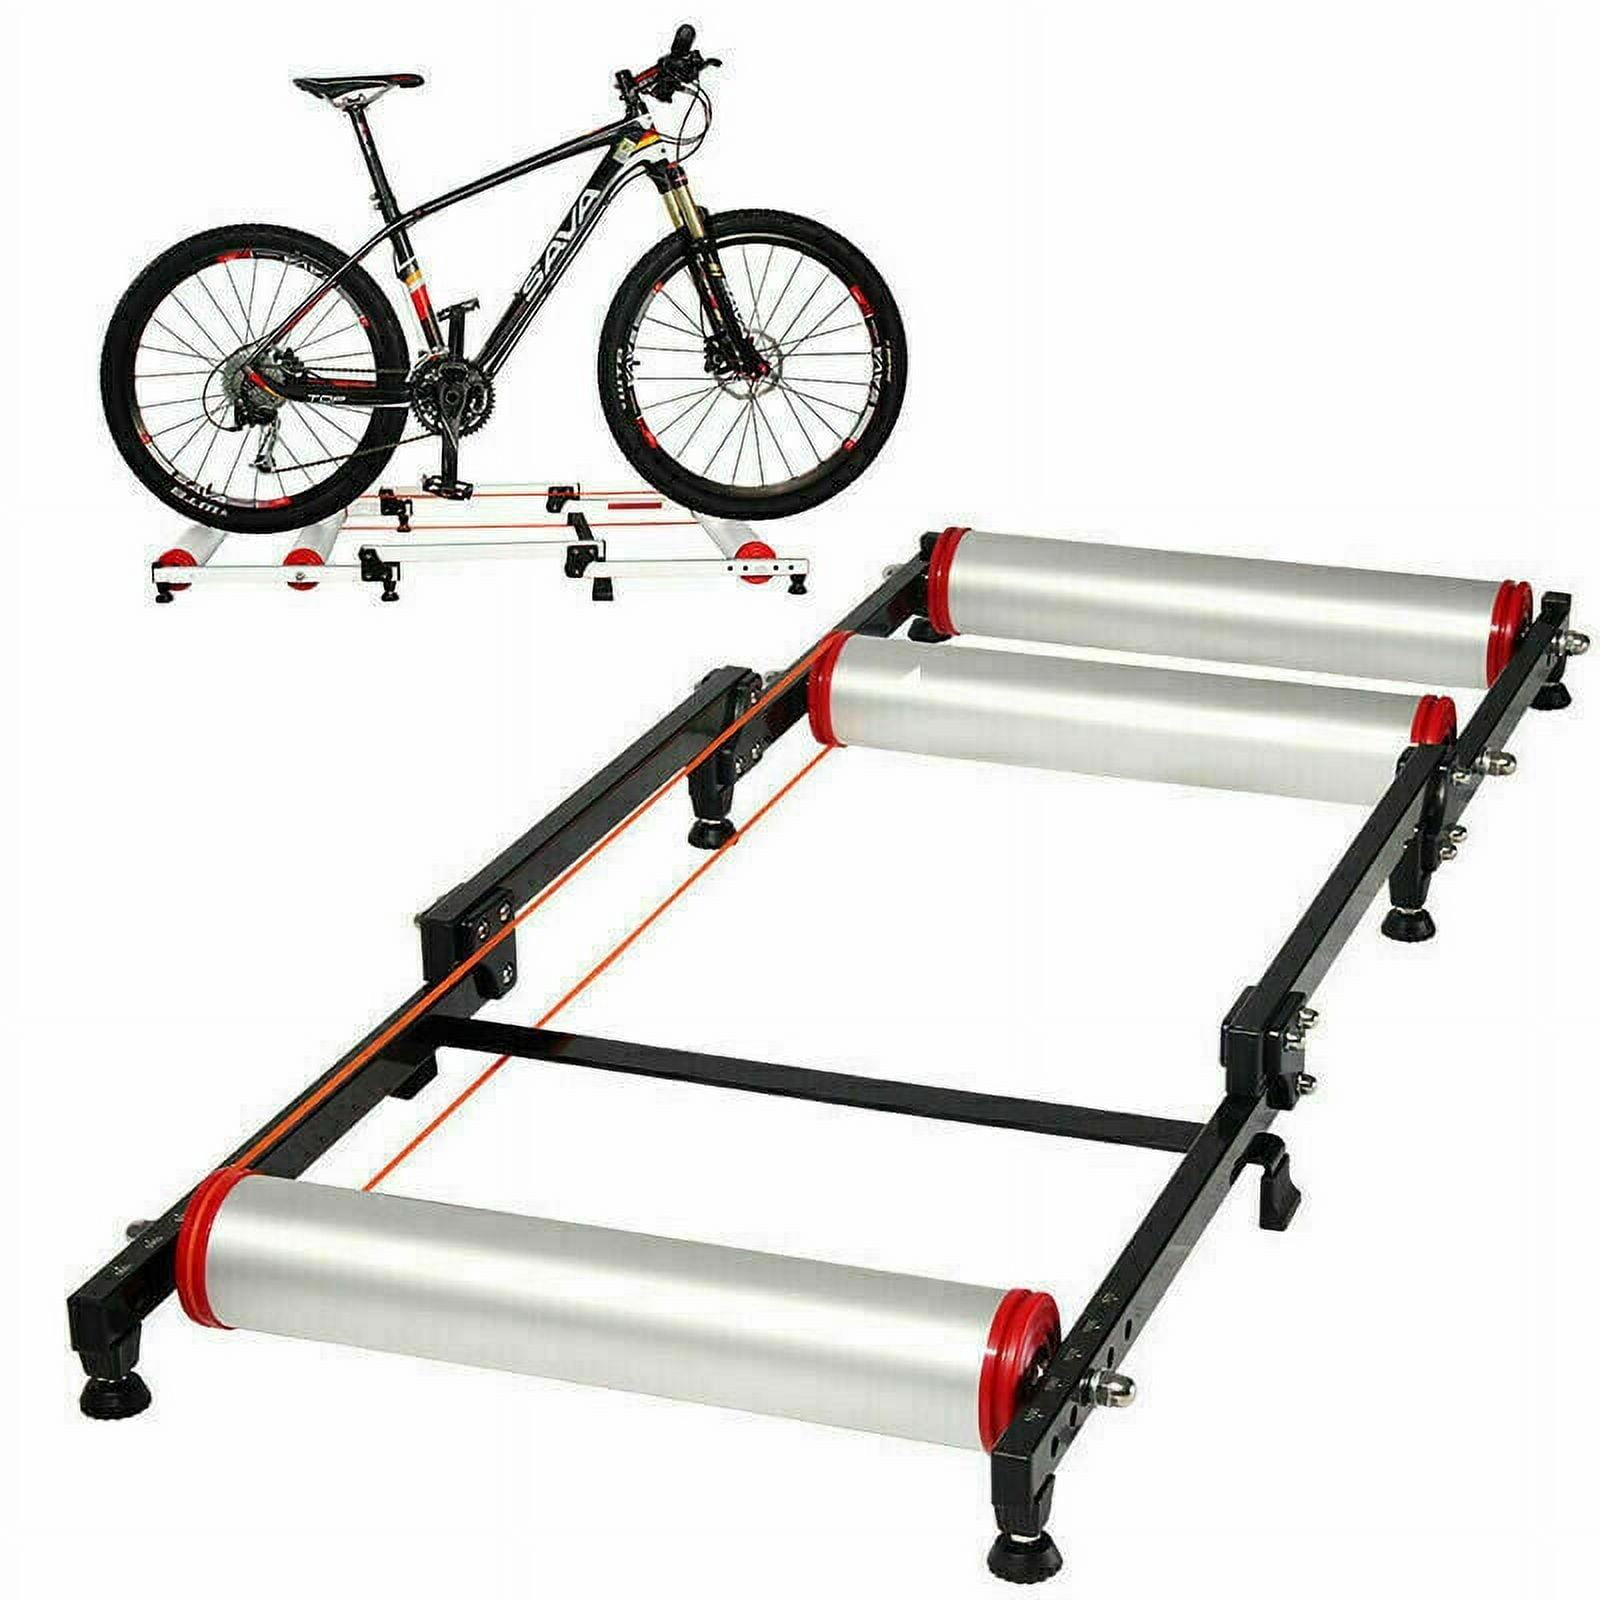 ROCKBROS MTB Road Bike Roller Trainer Stand Indoor Folding Trainer